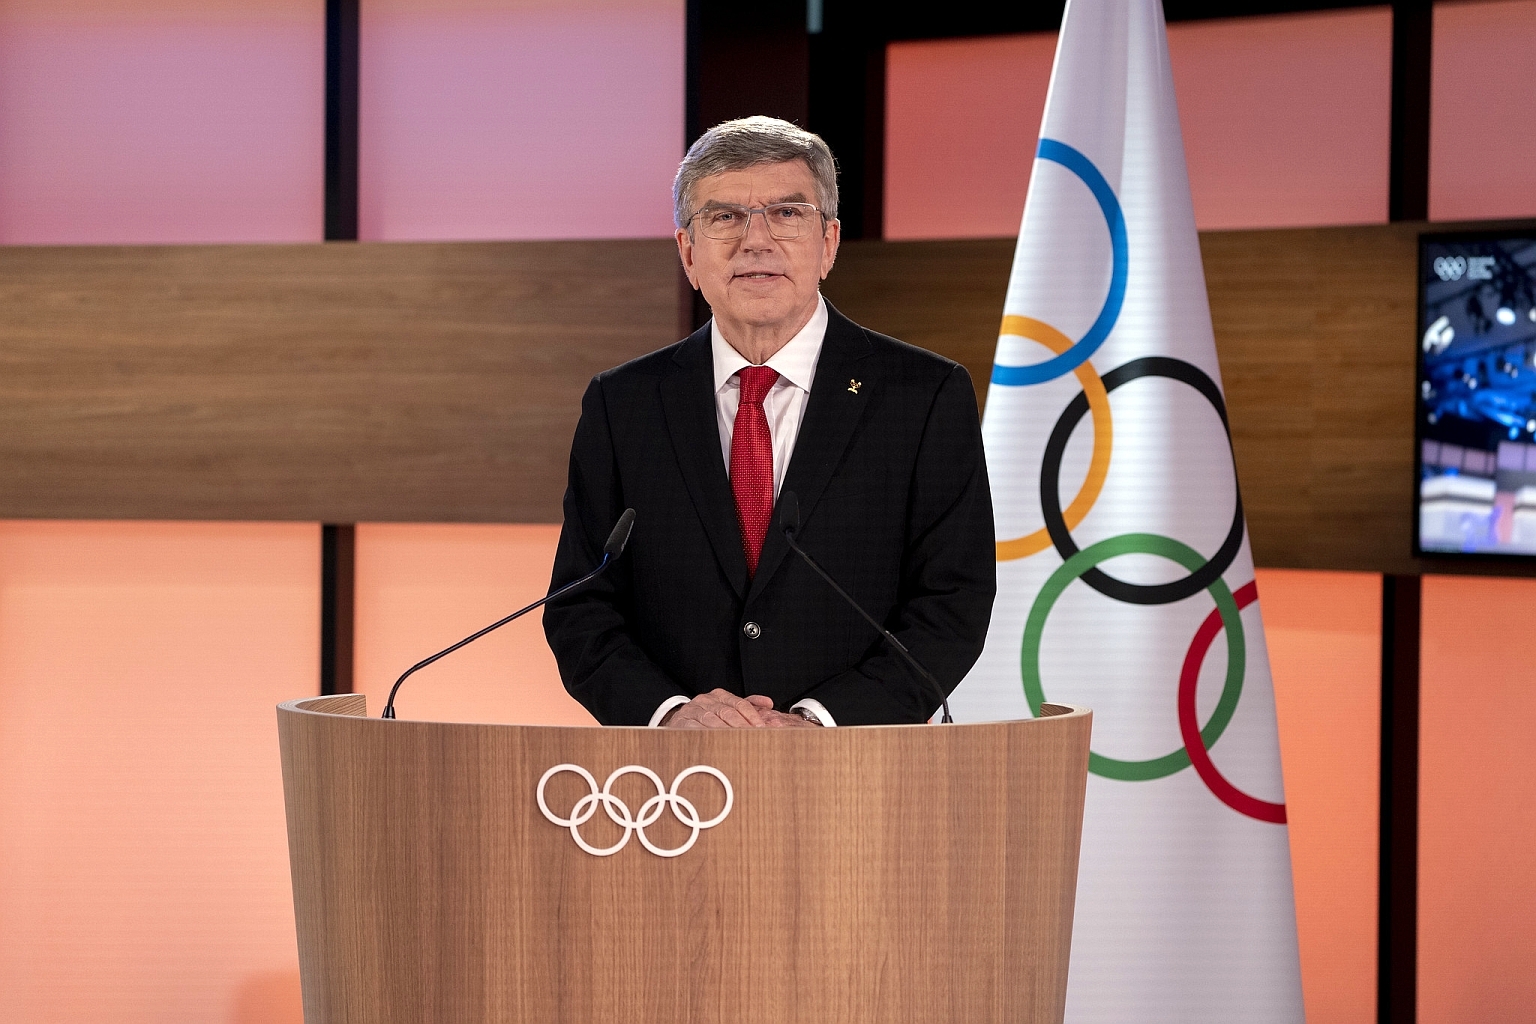 Foto: Thomas Bach als IOC Präsident wiedergewählt - © IOC